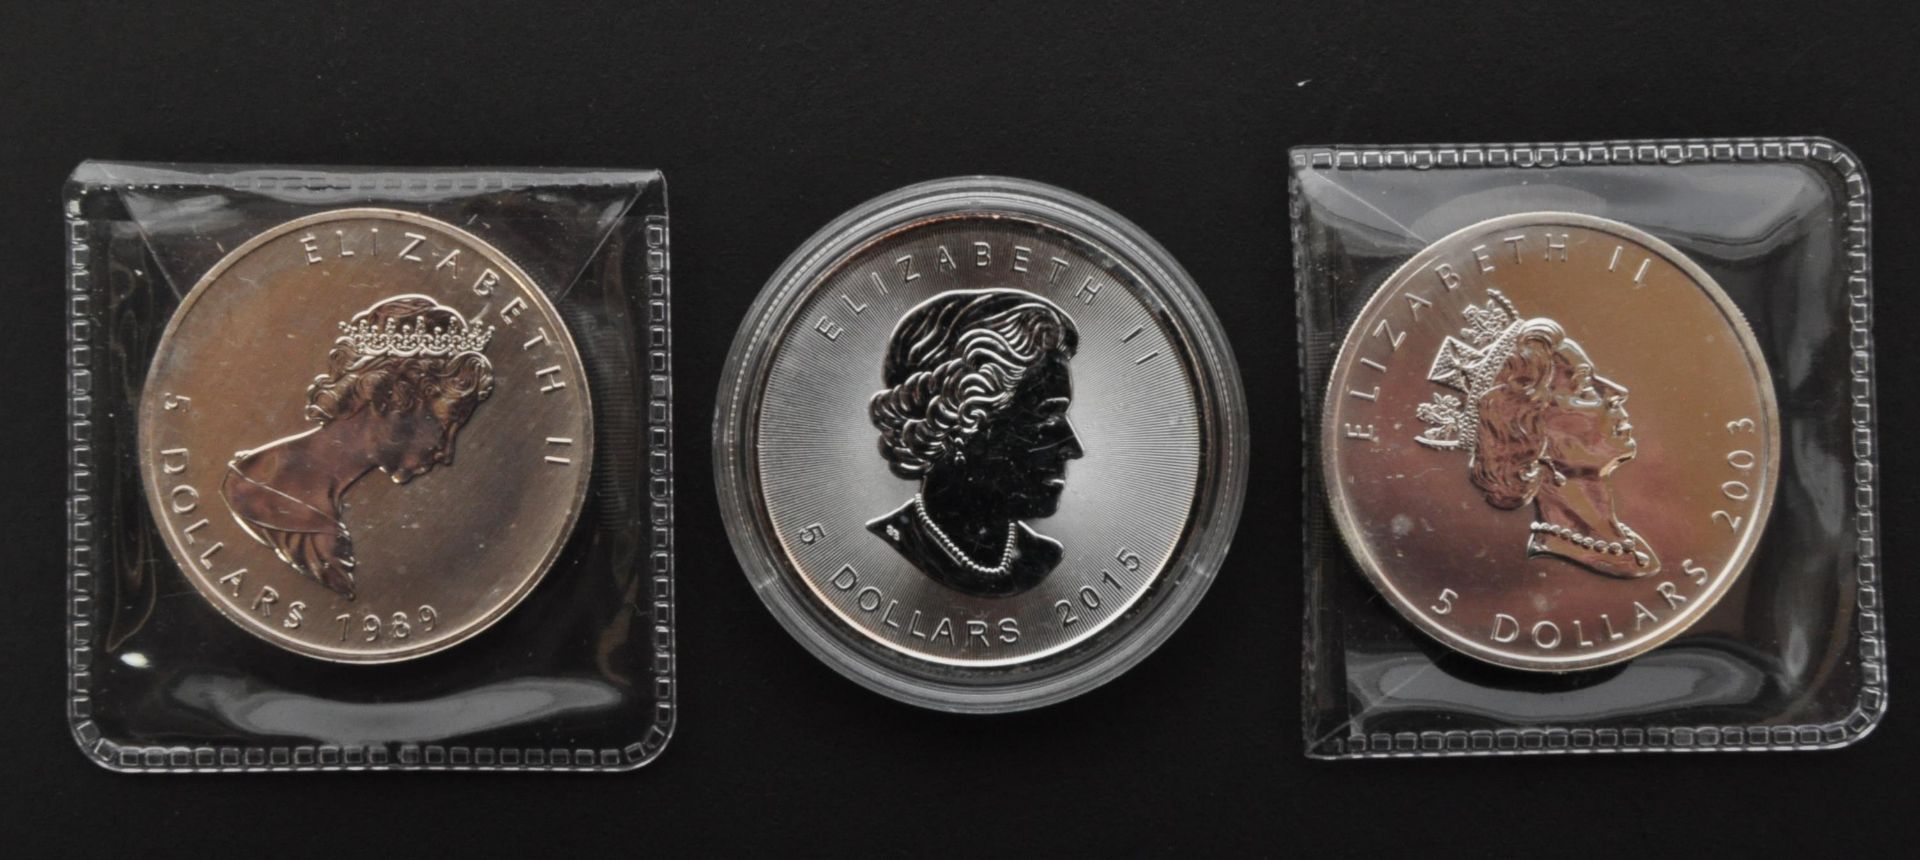 CANADA. THREE 1OZ 999 SILVER $5 DOLLARS MAPLE LEAF COINS - Image 2 of 3